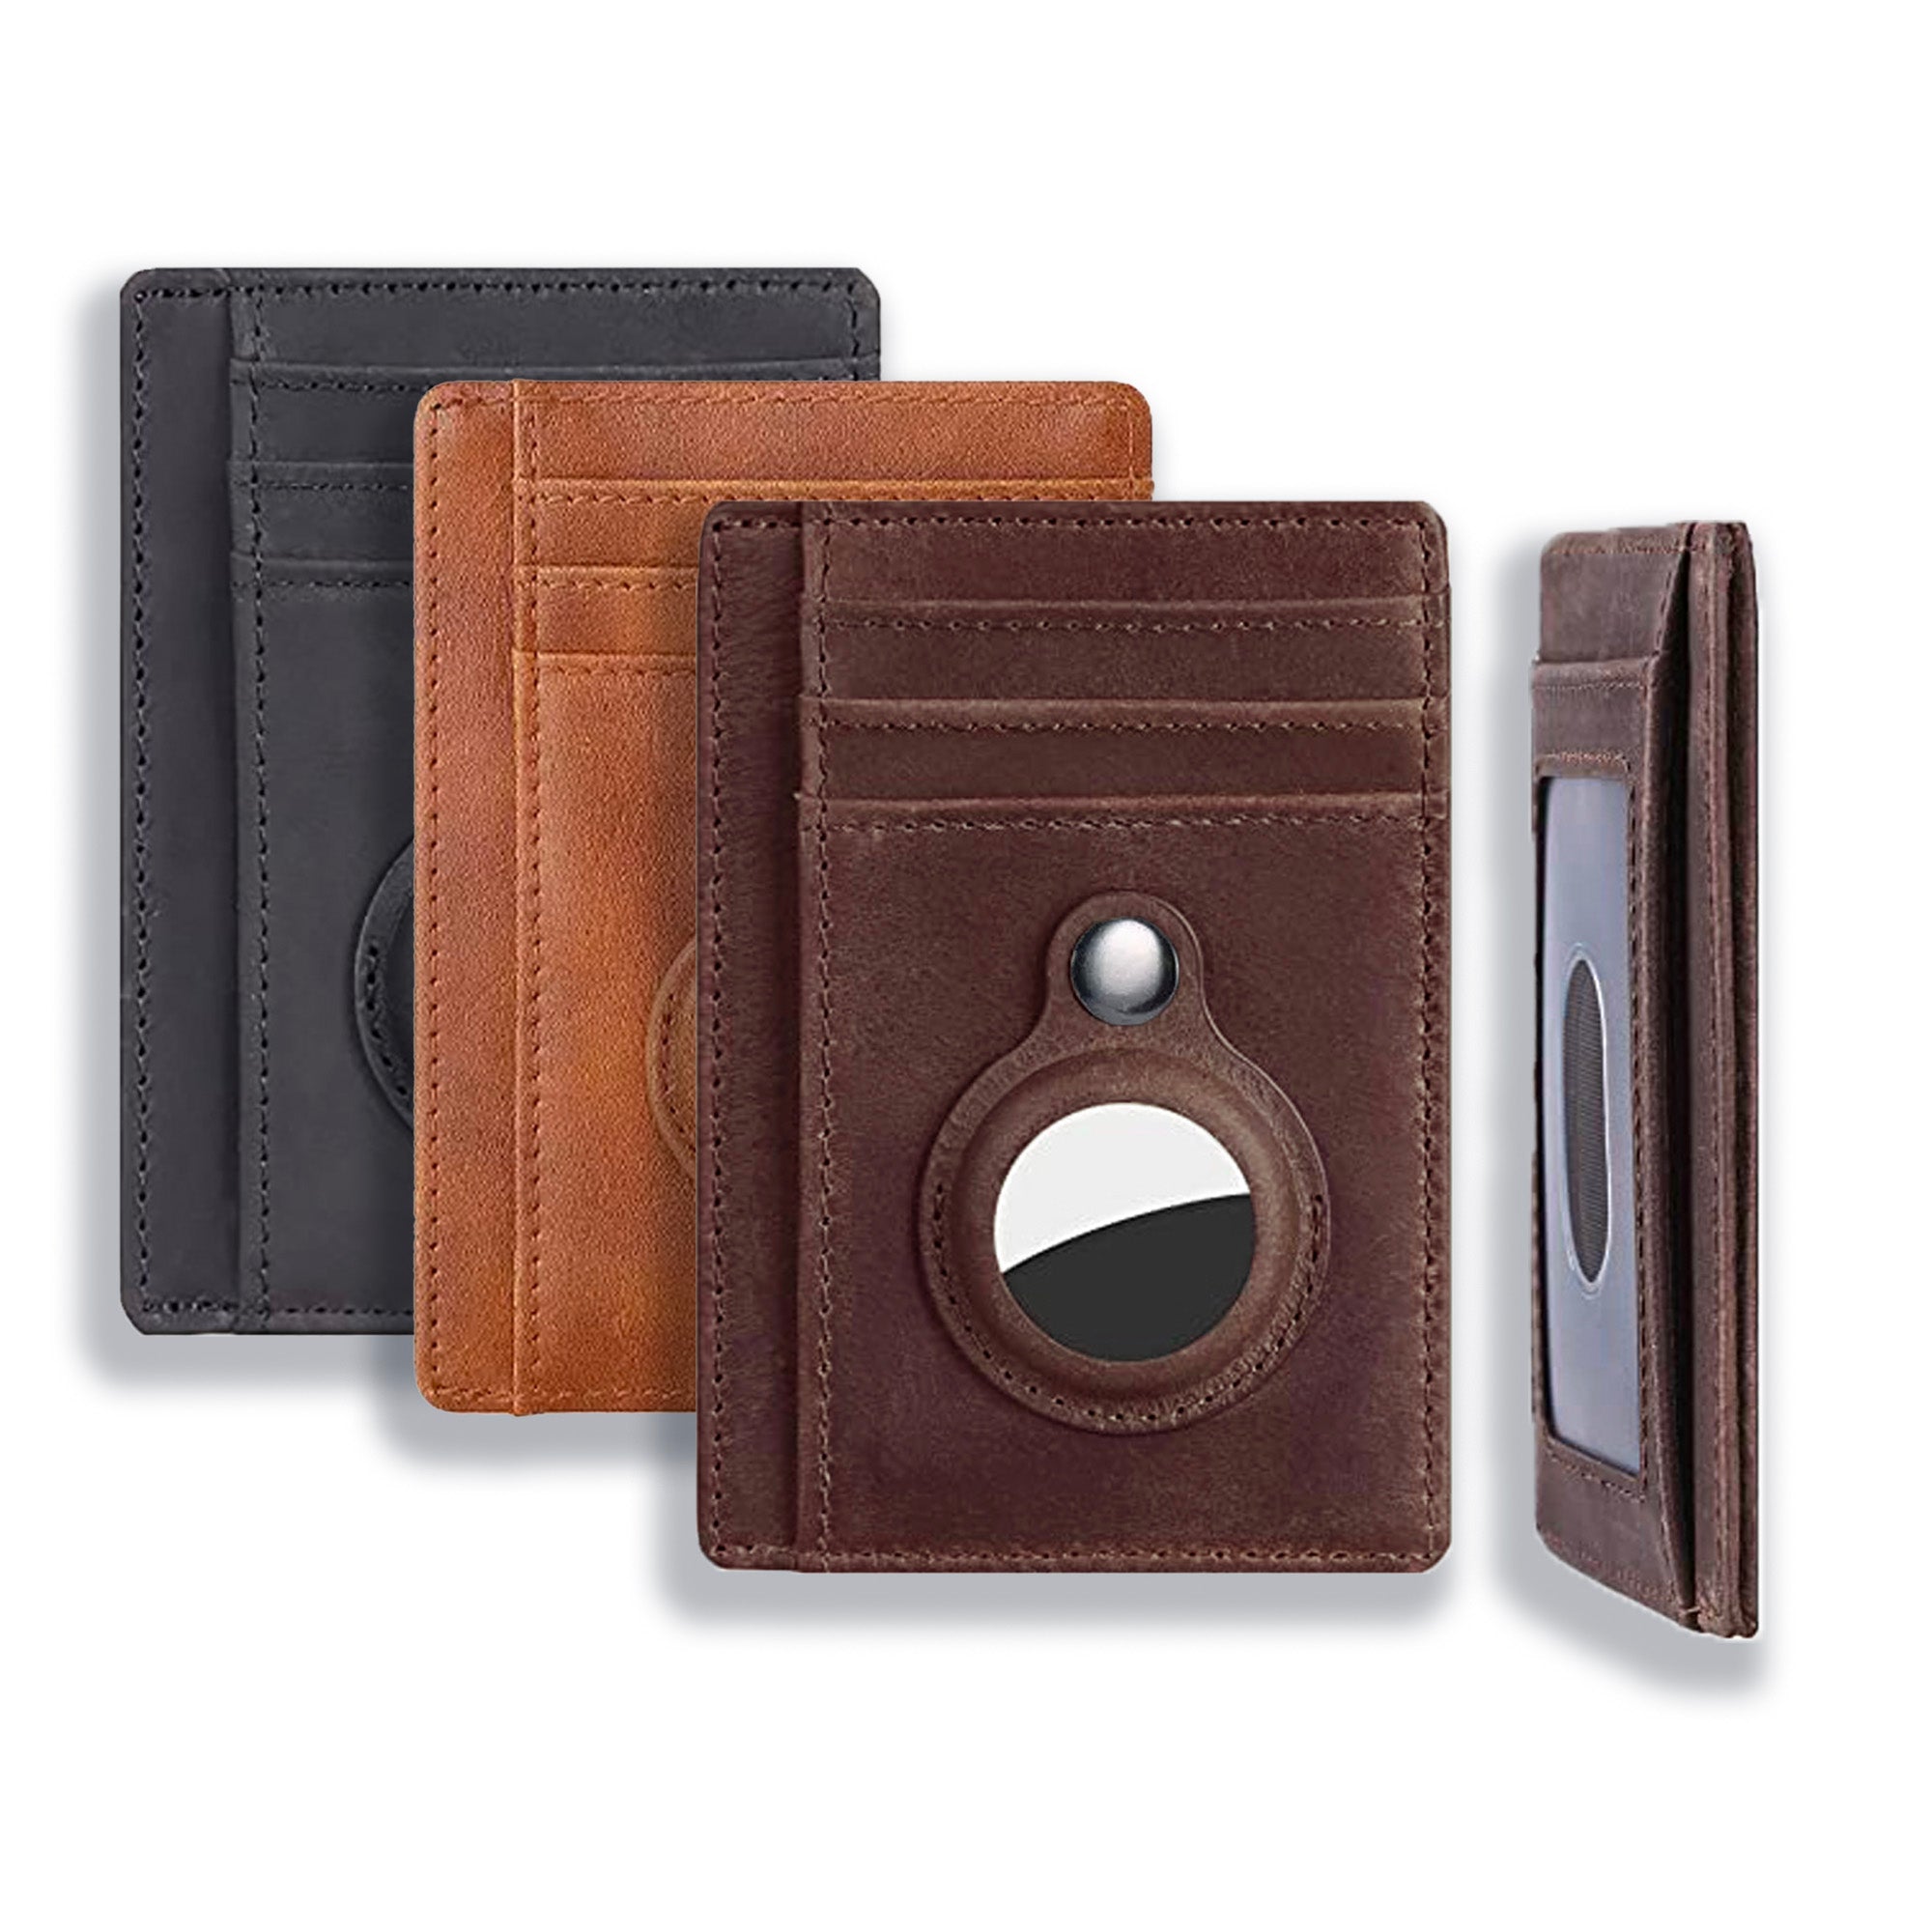 AirTag Minimalist Slim Wallet | Genuine Leather Wallet | RFID Wallet | Leather Card Holder Wallets   Accessories Gifts UK